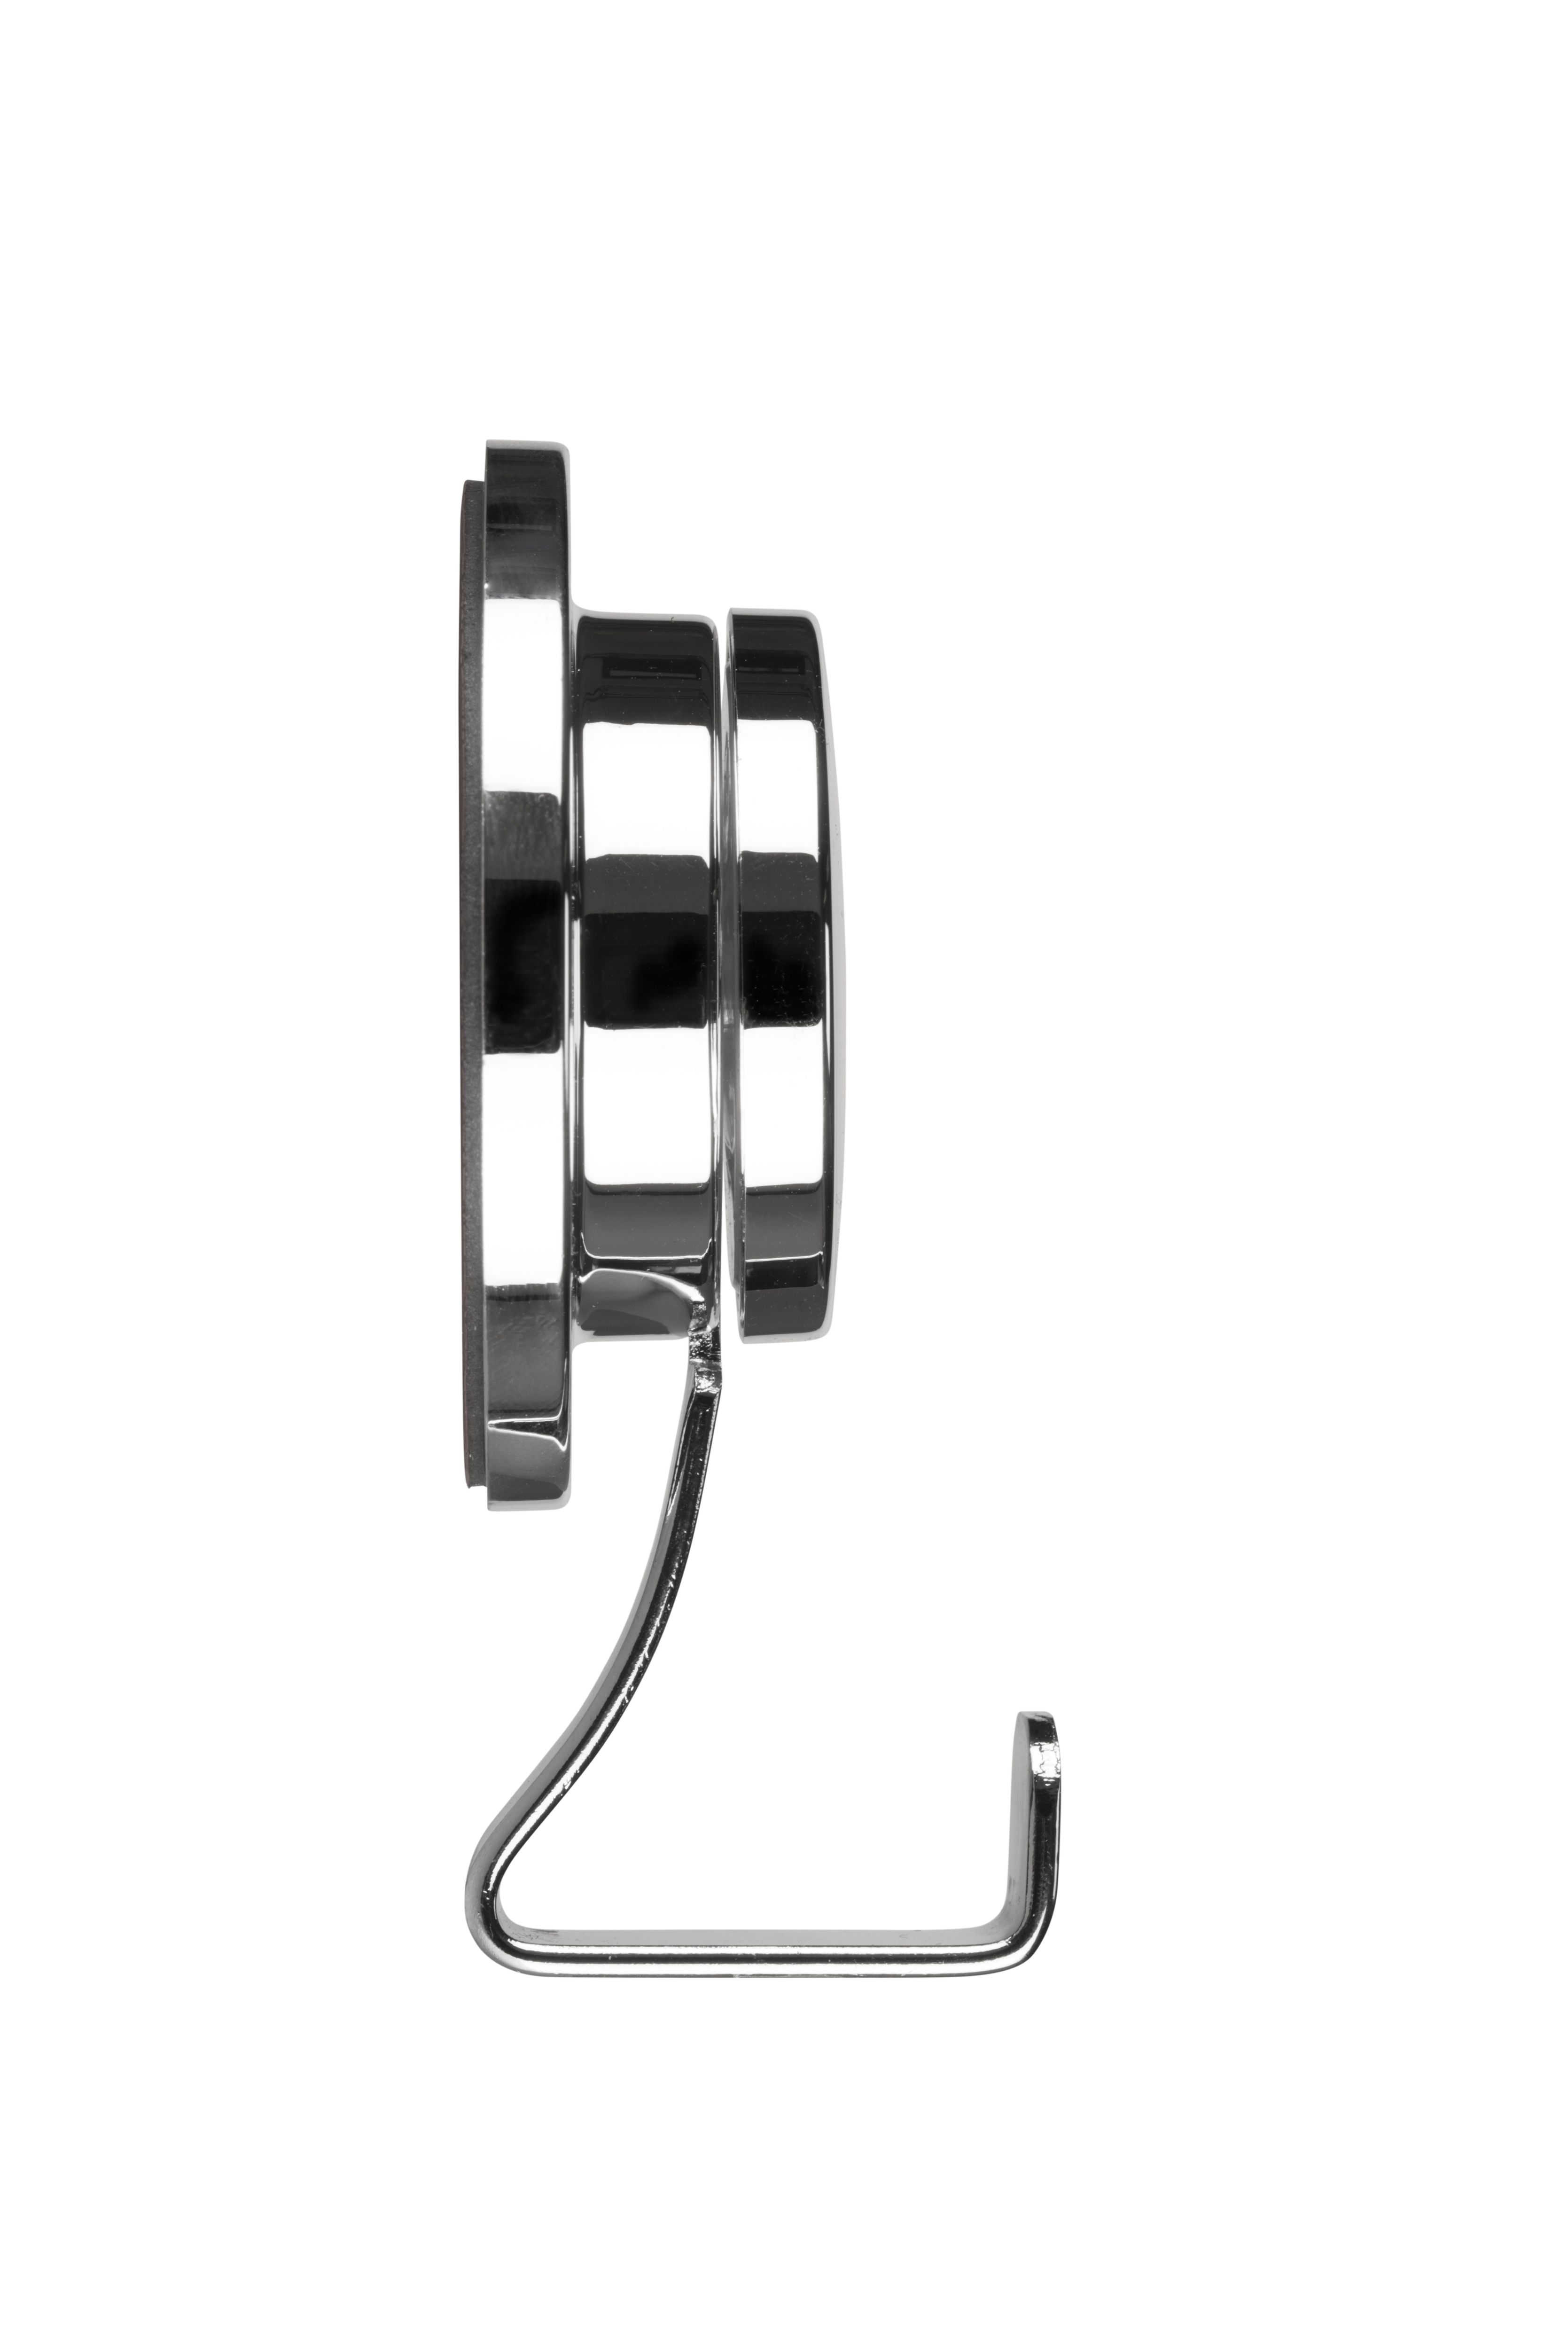 Croydex Chrome effect Steel Hook (Holds)2.5kg